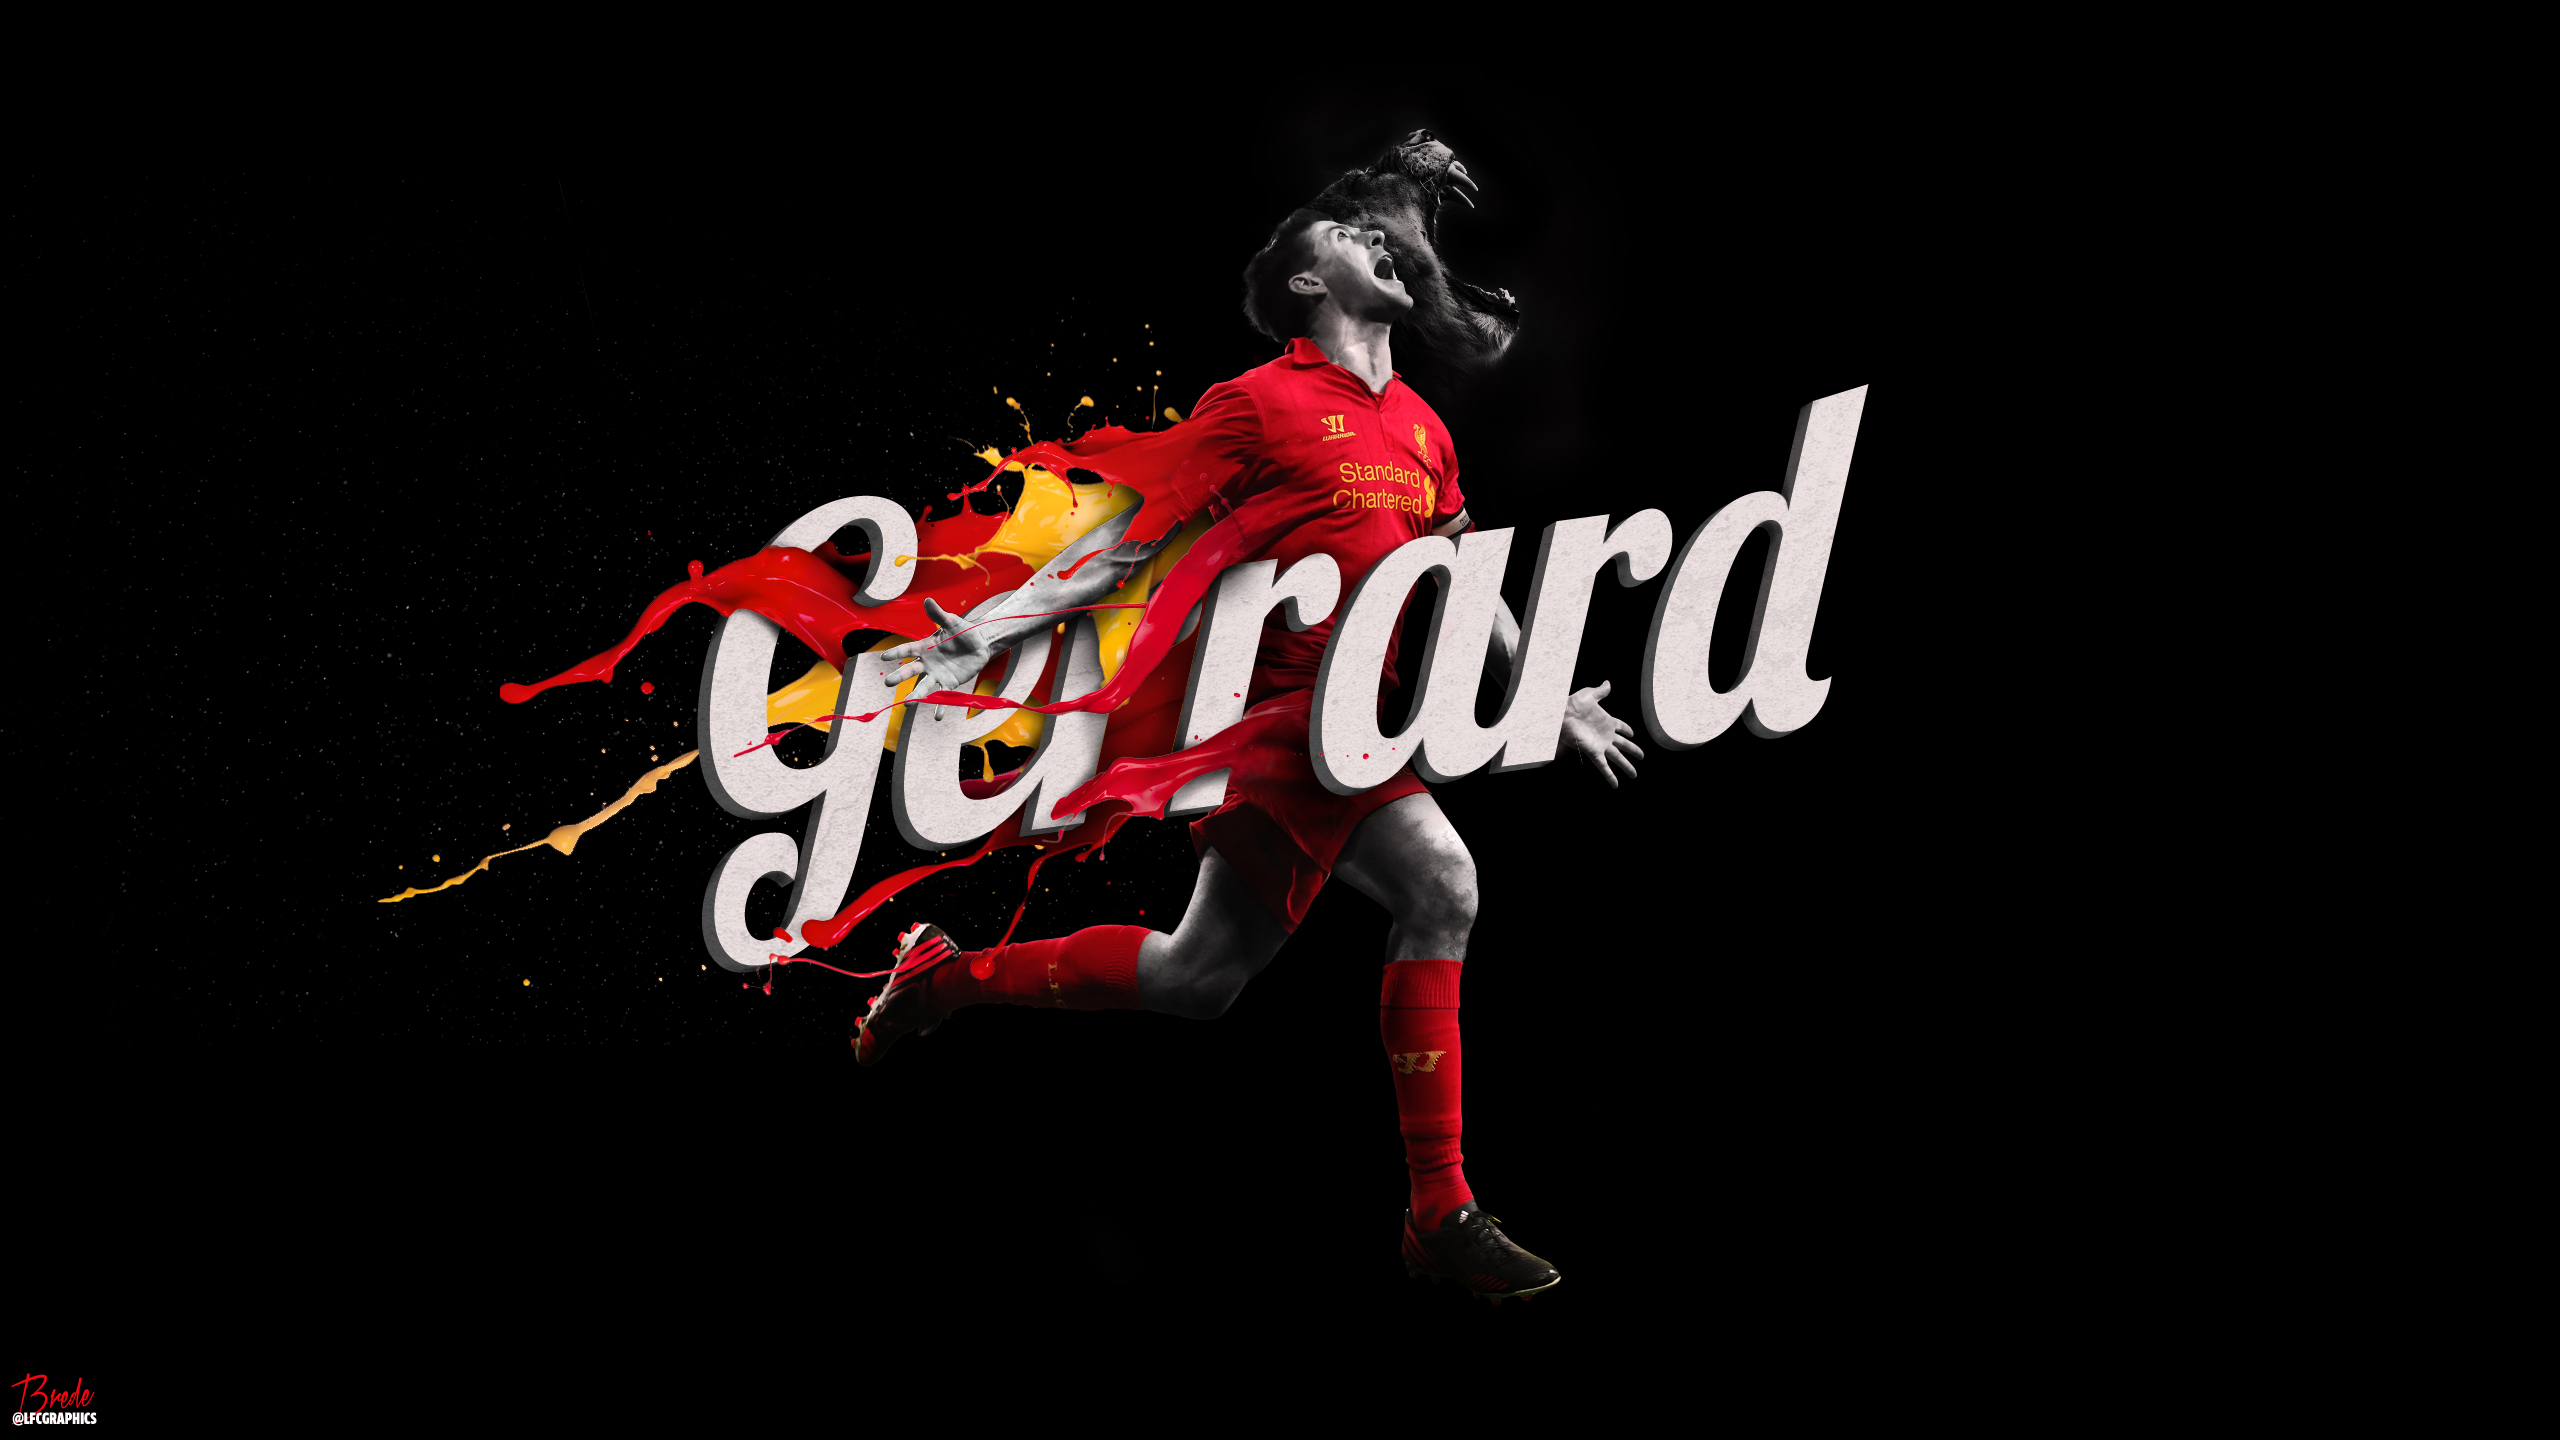 Descarga gratuita de fondo de pantalla para móvil de Fútbol, Deporte, Liverpool Fc, Steven Gerrard.